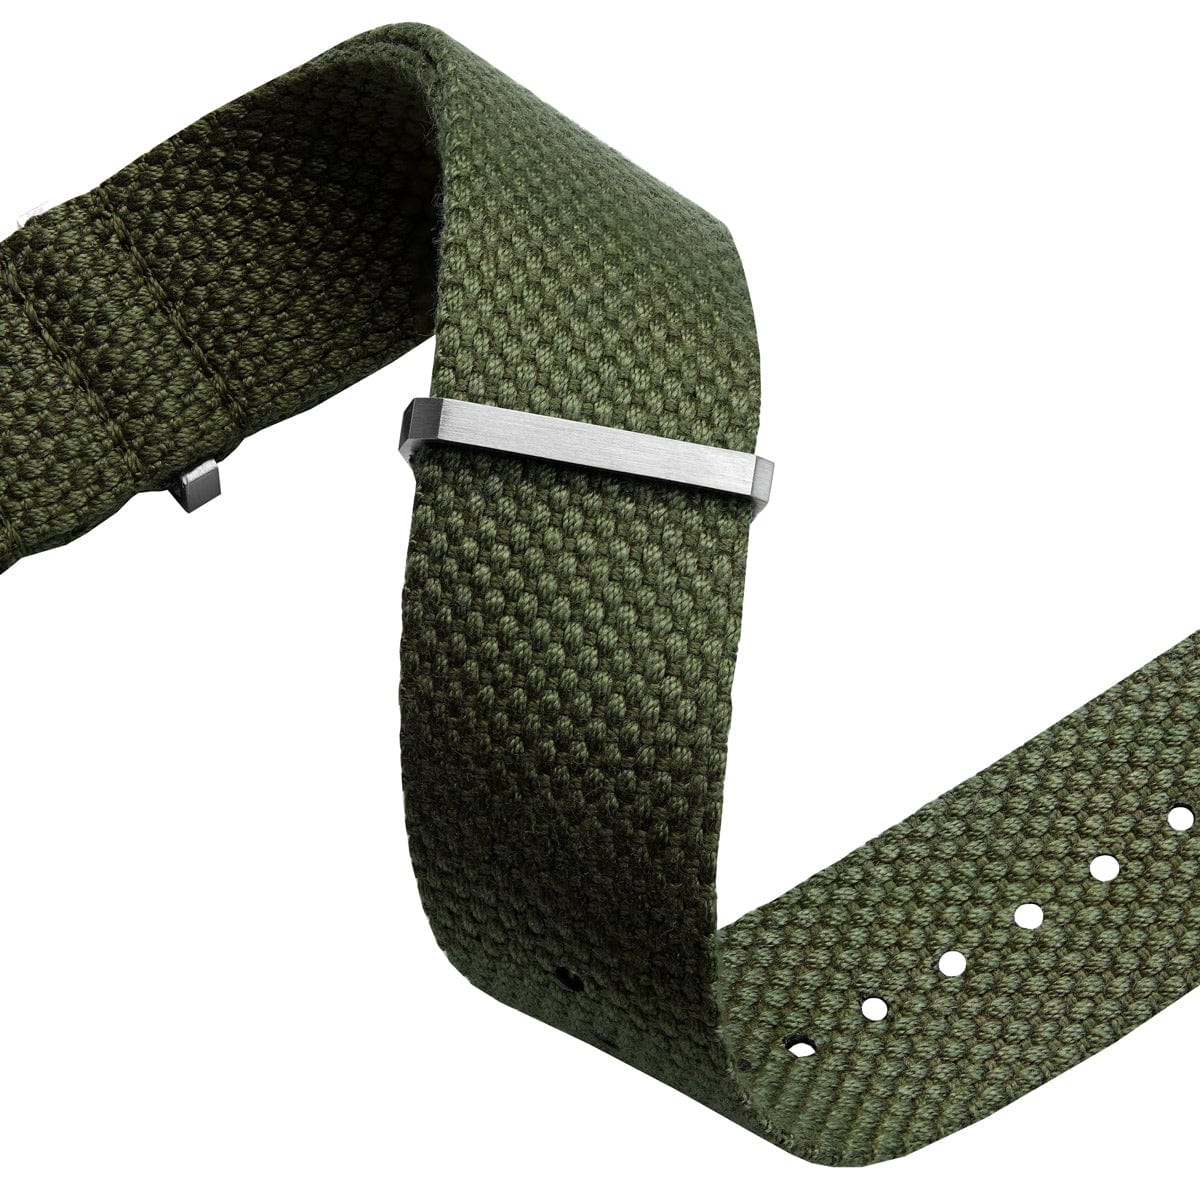 WatchGecko Braemore Military Nylon Watch Strap - Army Green